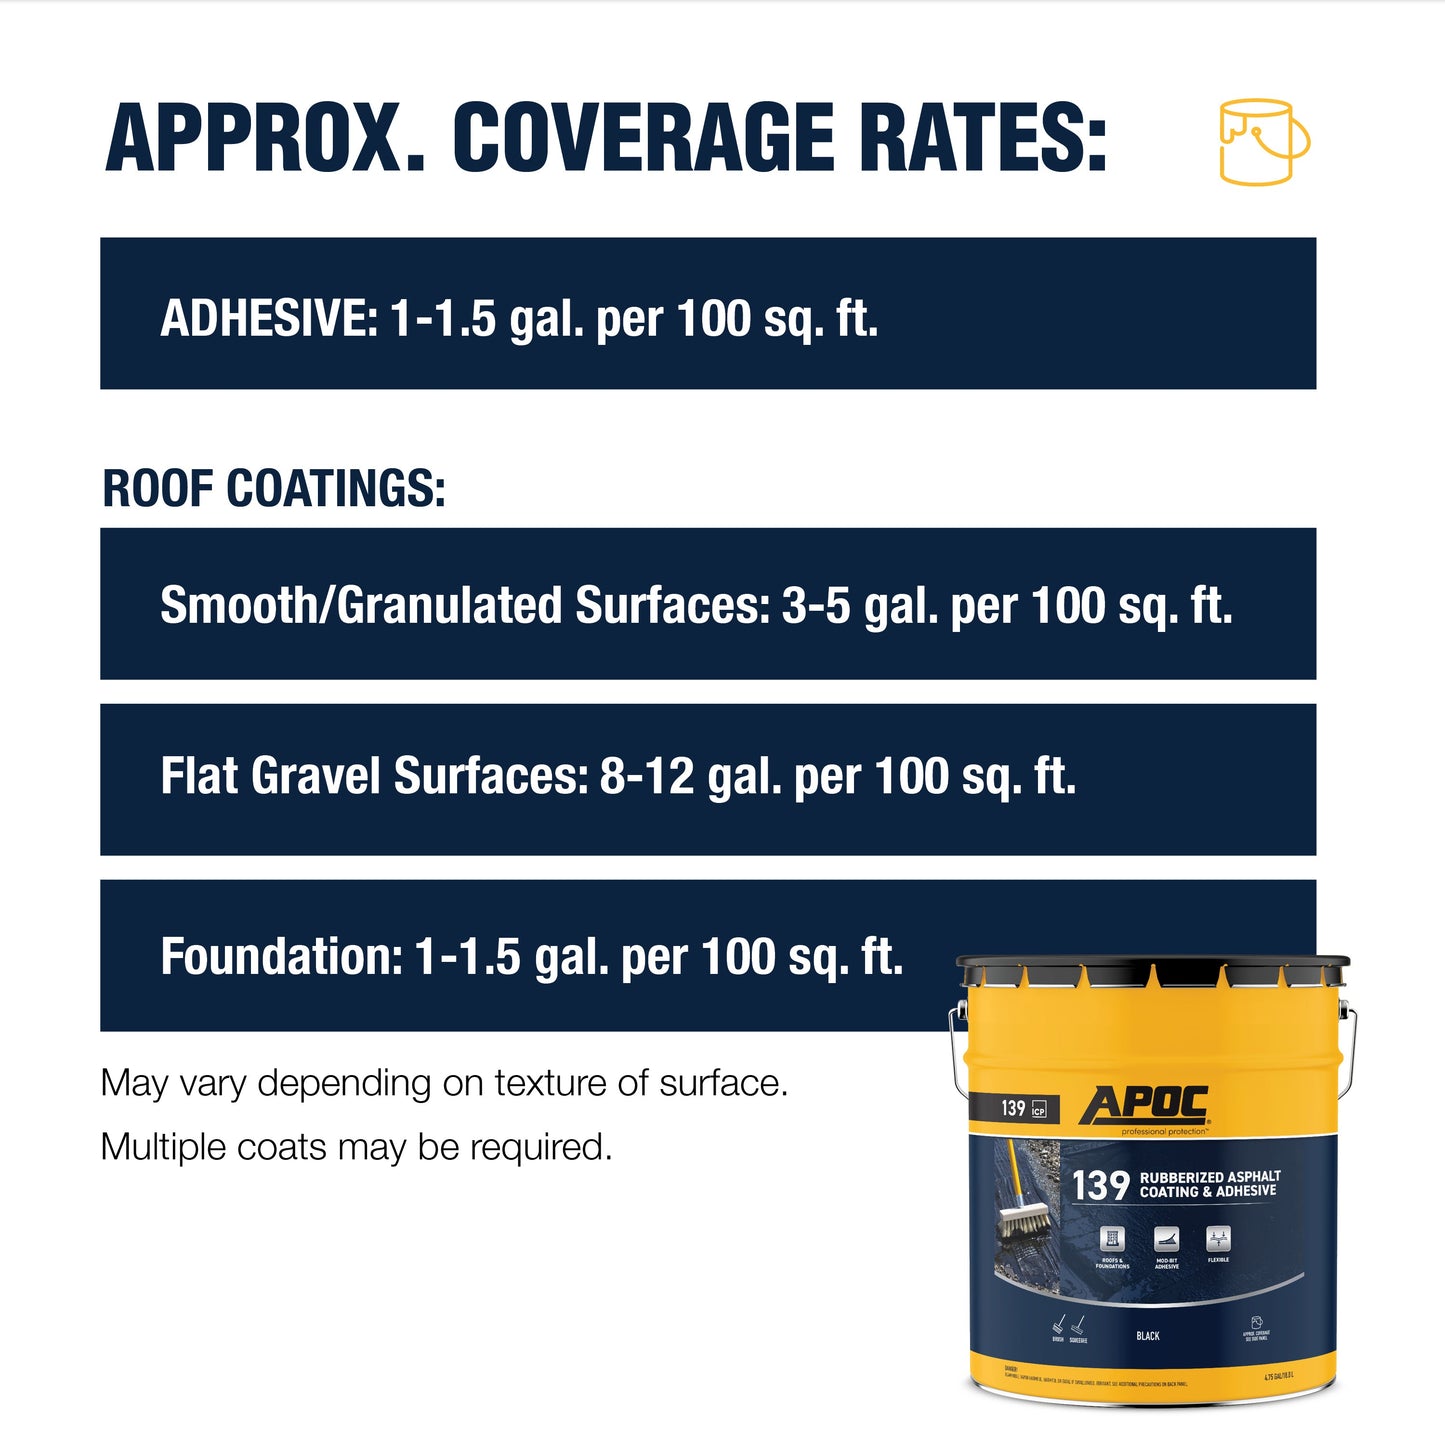 APOC<sup>®</sup> 139<br> Rubberized Asphalt Coating & Adhesive